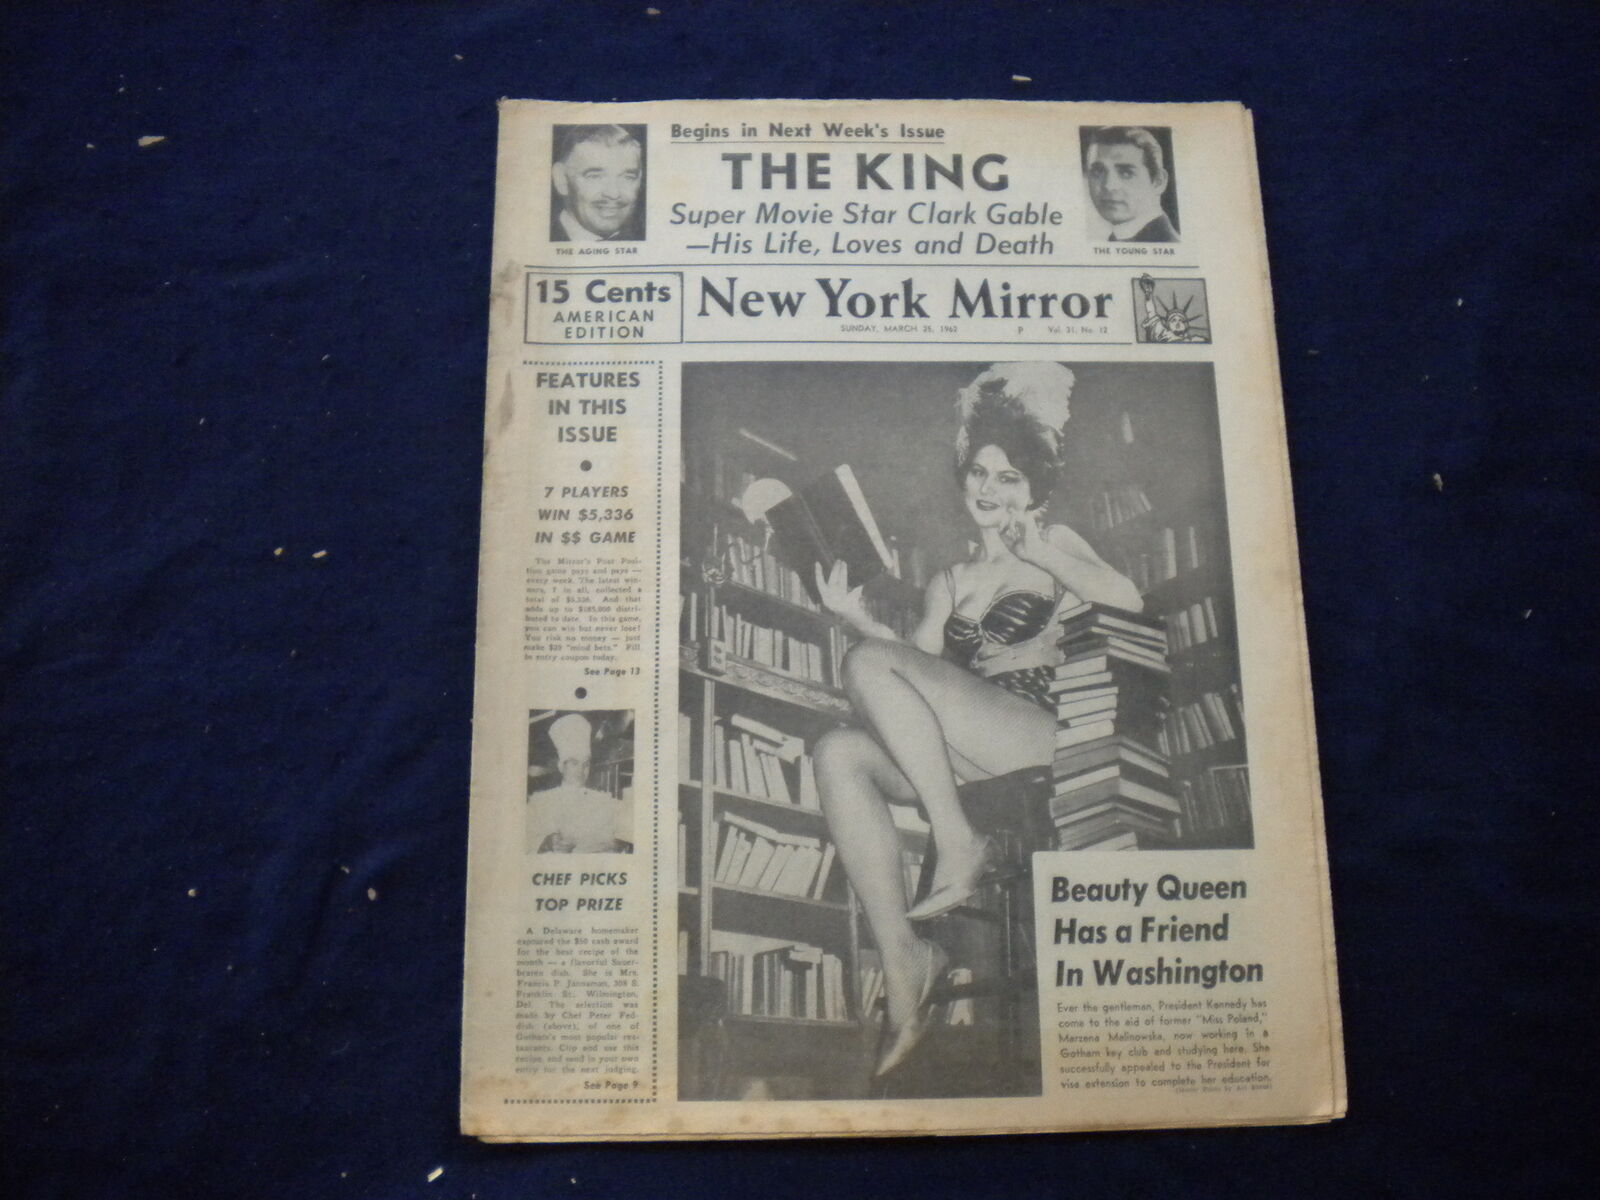 1962 MARCH 25 NEW YORK MIRROR NEWSPAPER - GLORIA TALBOT COVER PHOTO - NP 5999